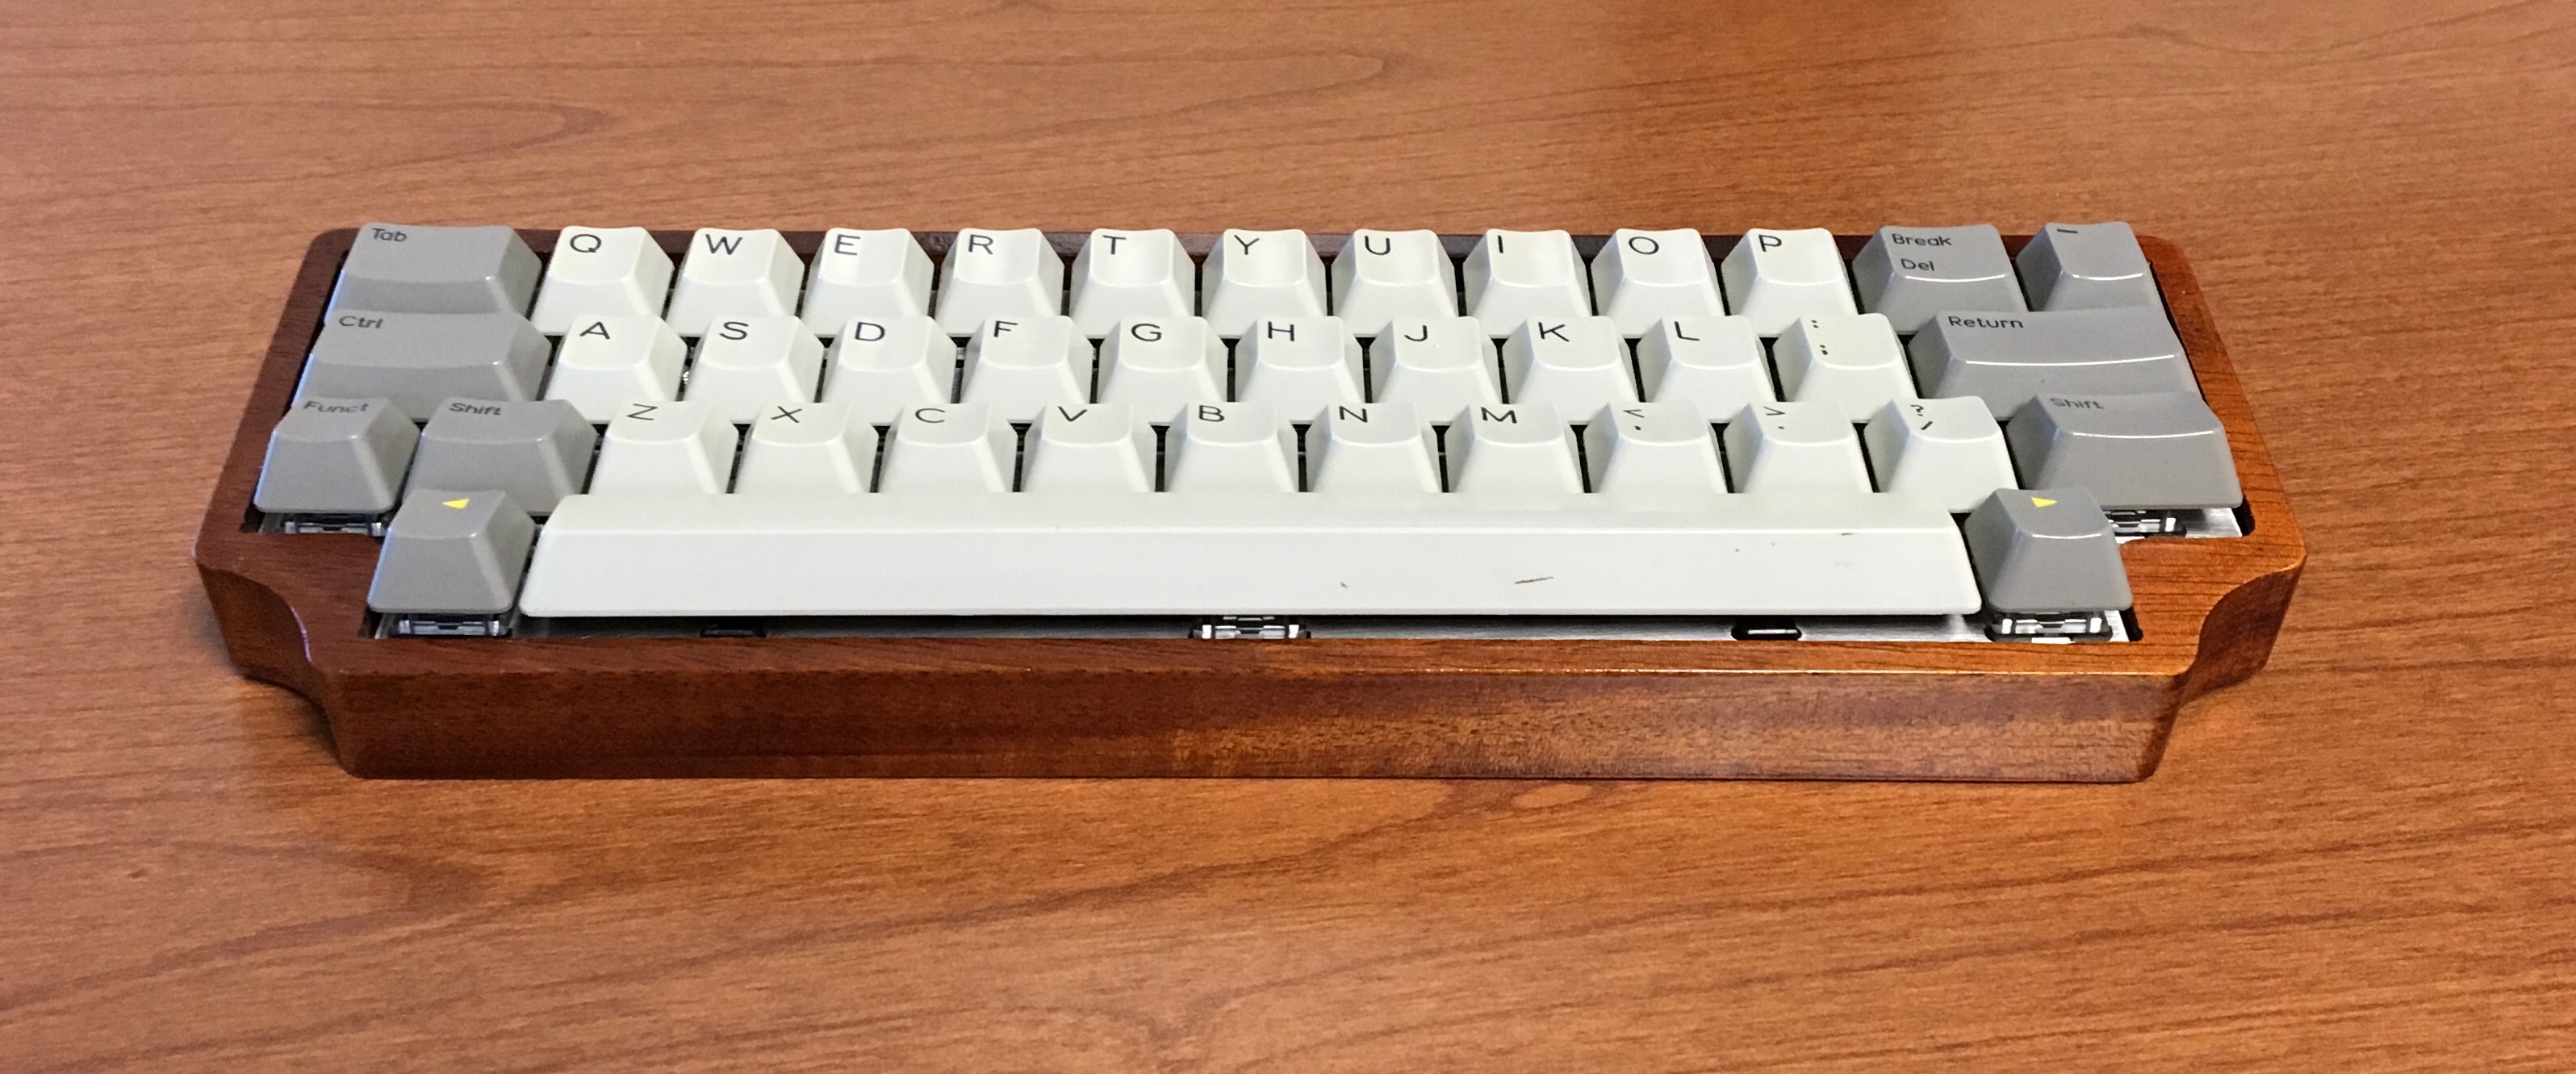 TransitVan with Wyse Terminal Keyboard caps